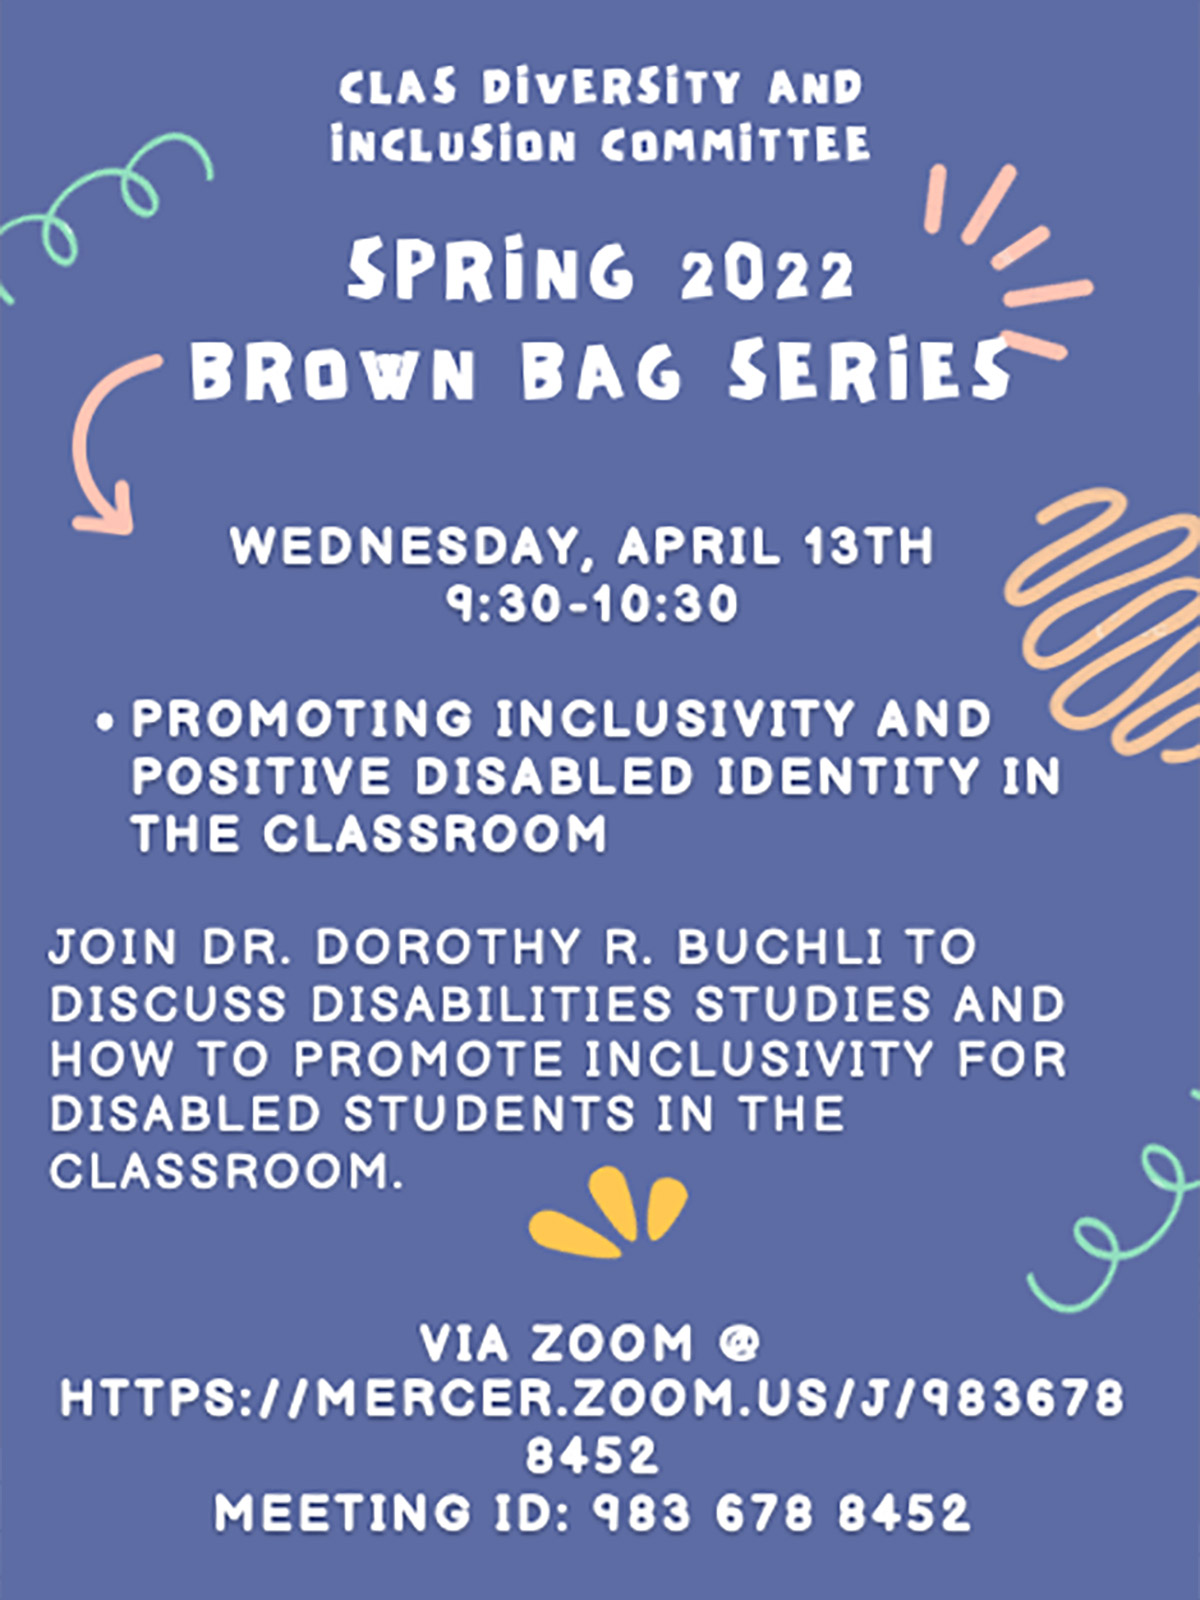 Brown Bag Series: Spring 2022